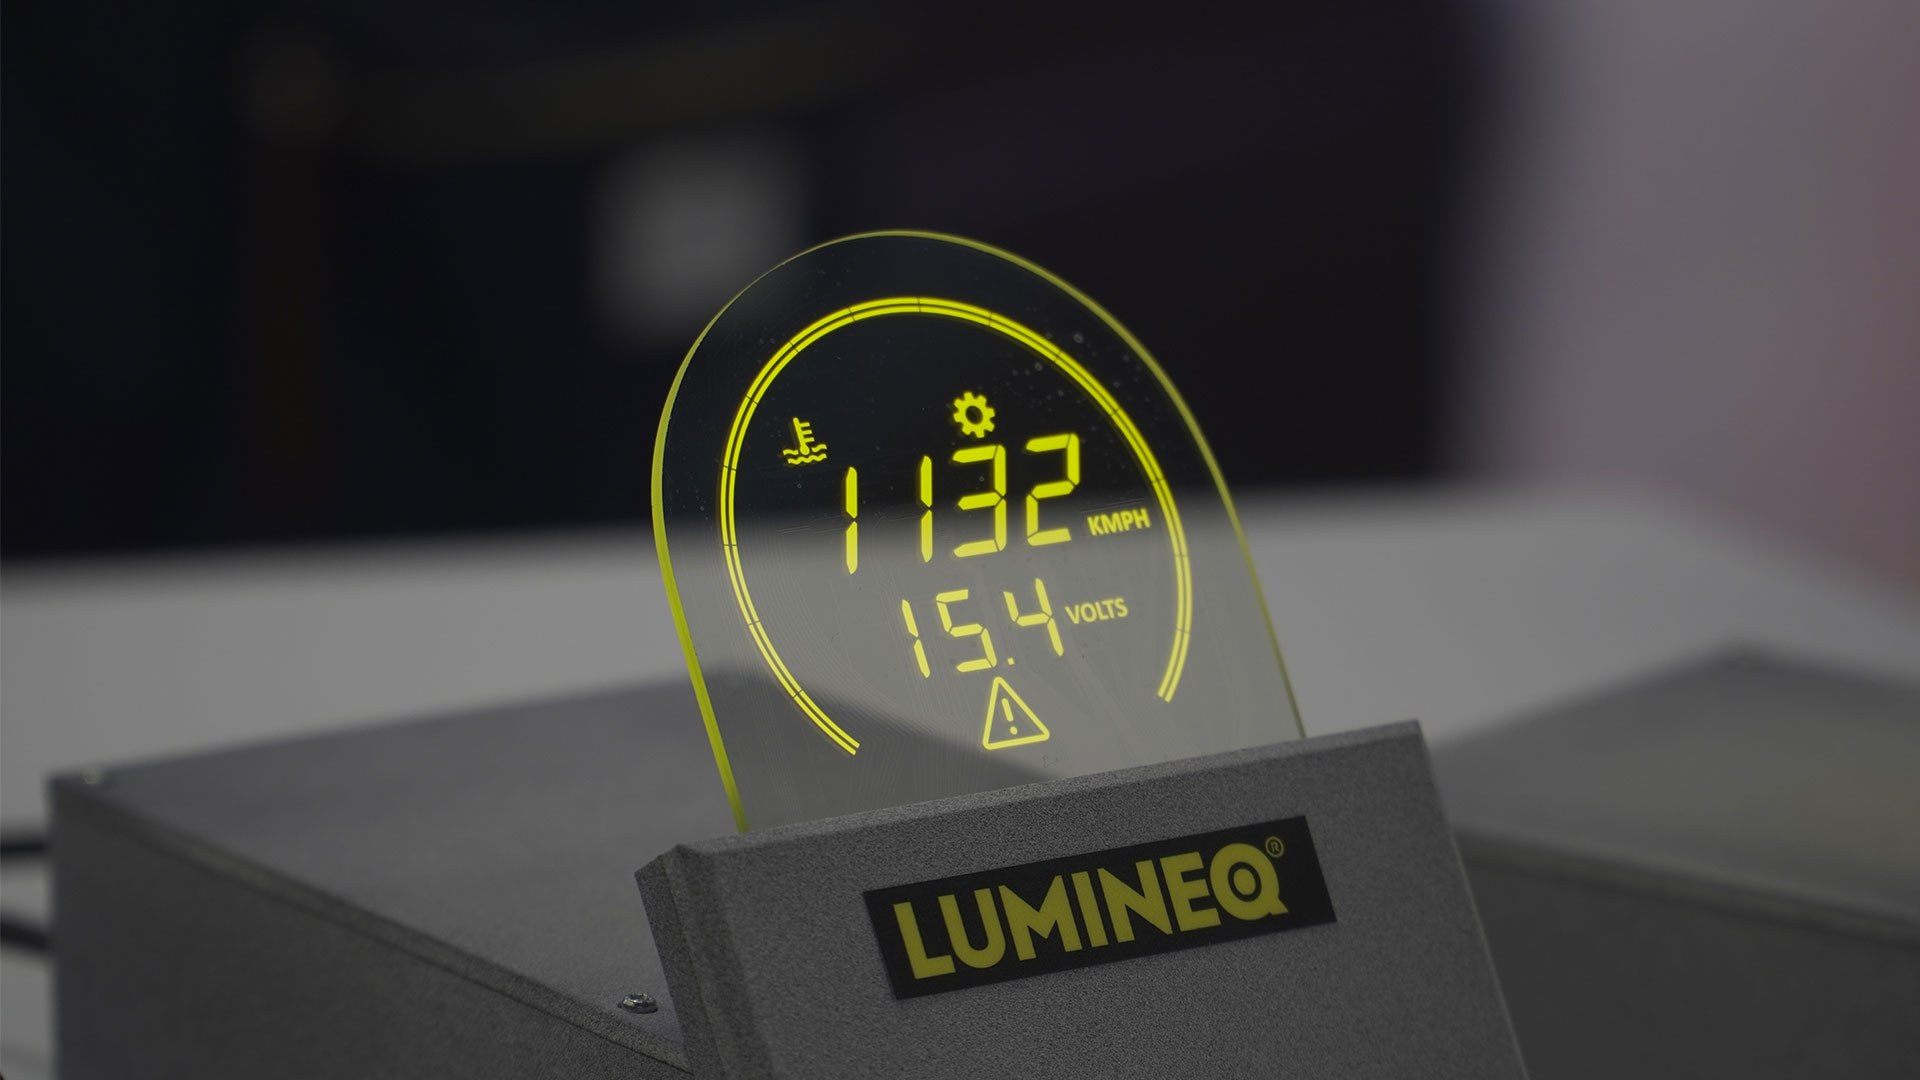 Embedded-World-lumineq-varius-gauge-1920x1080